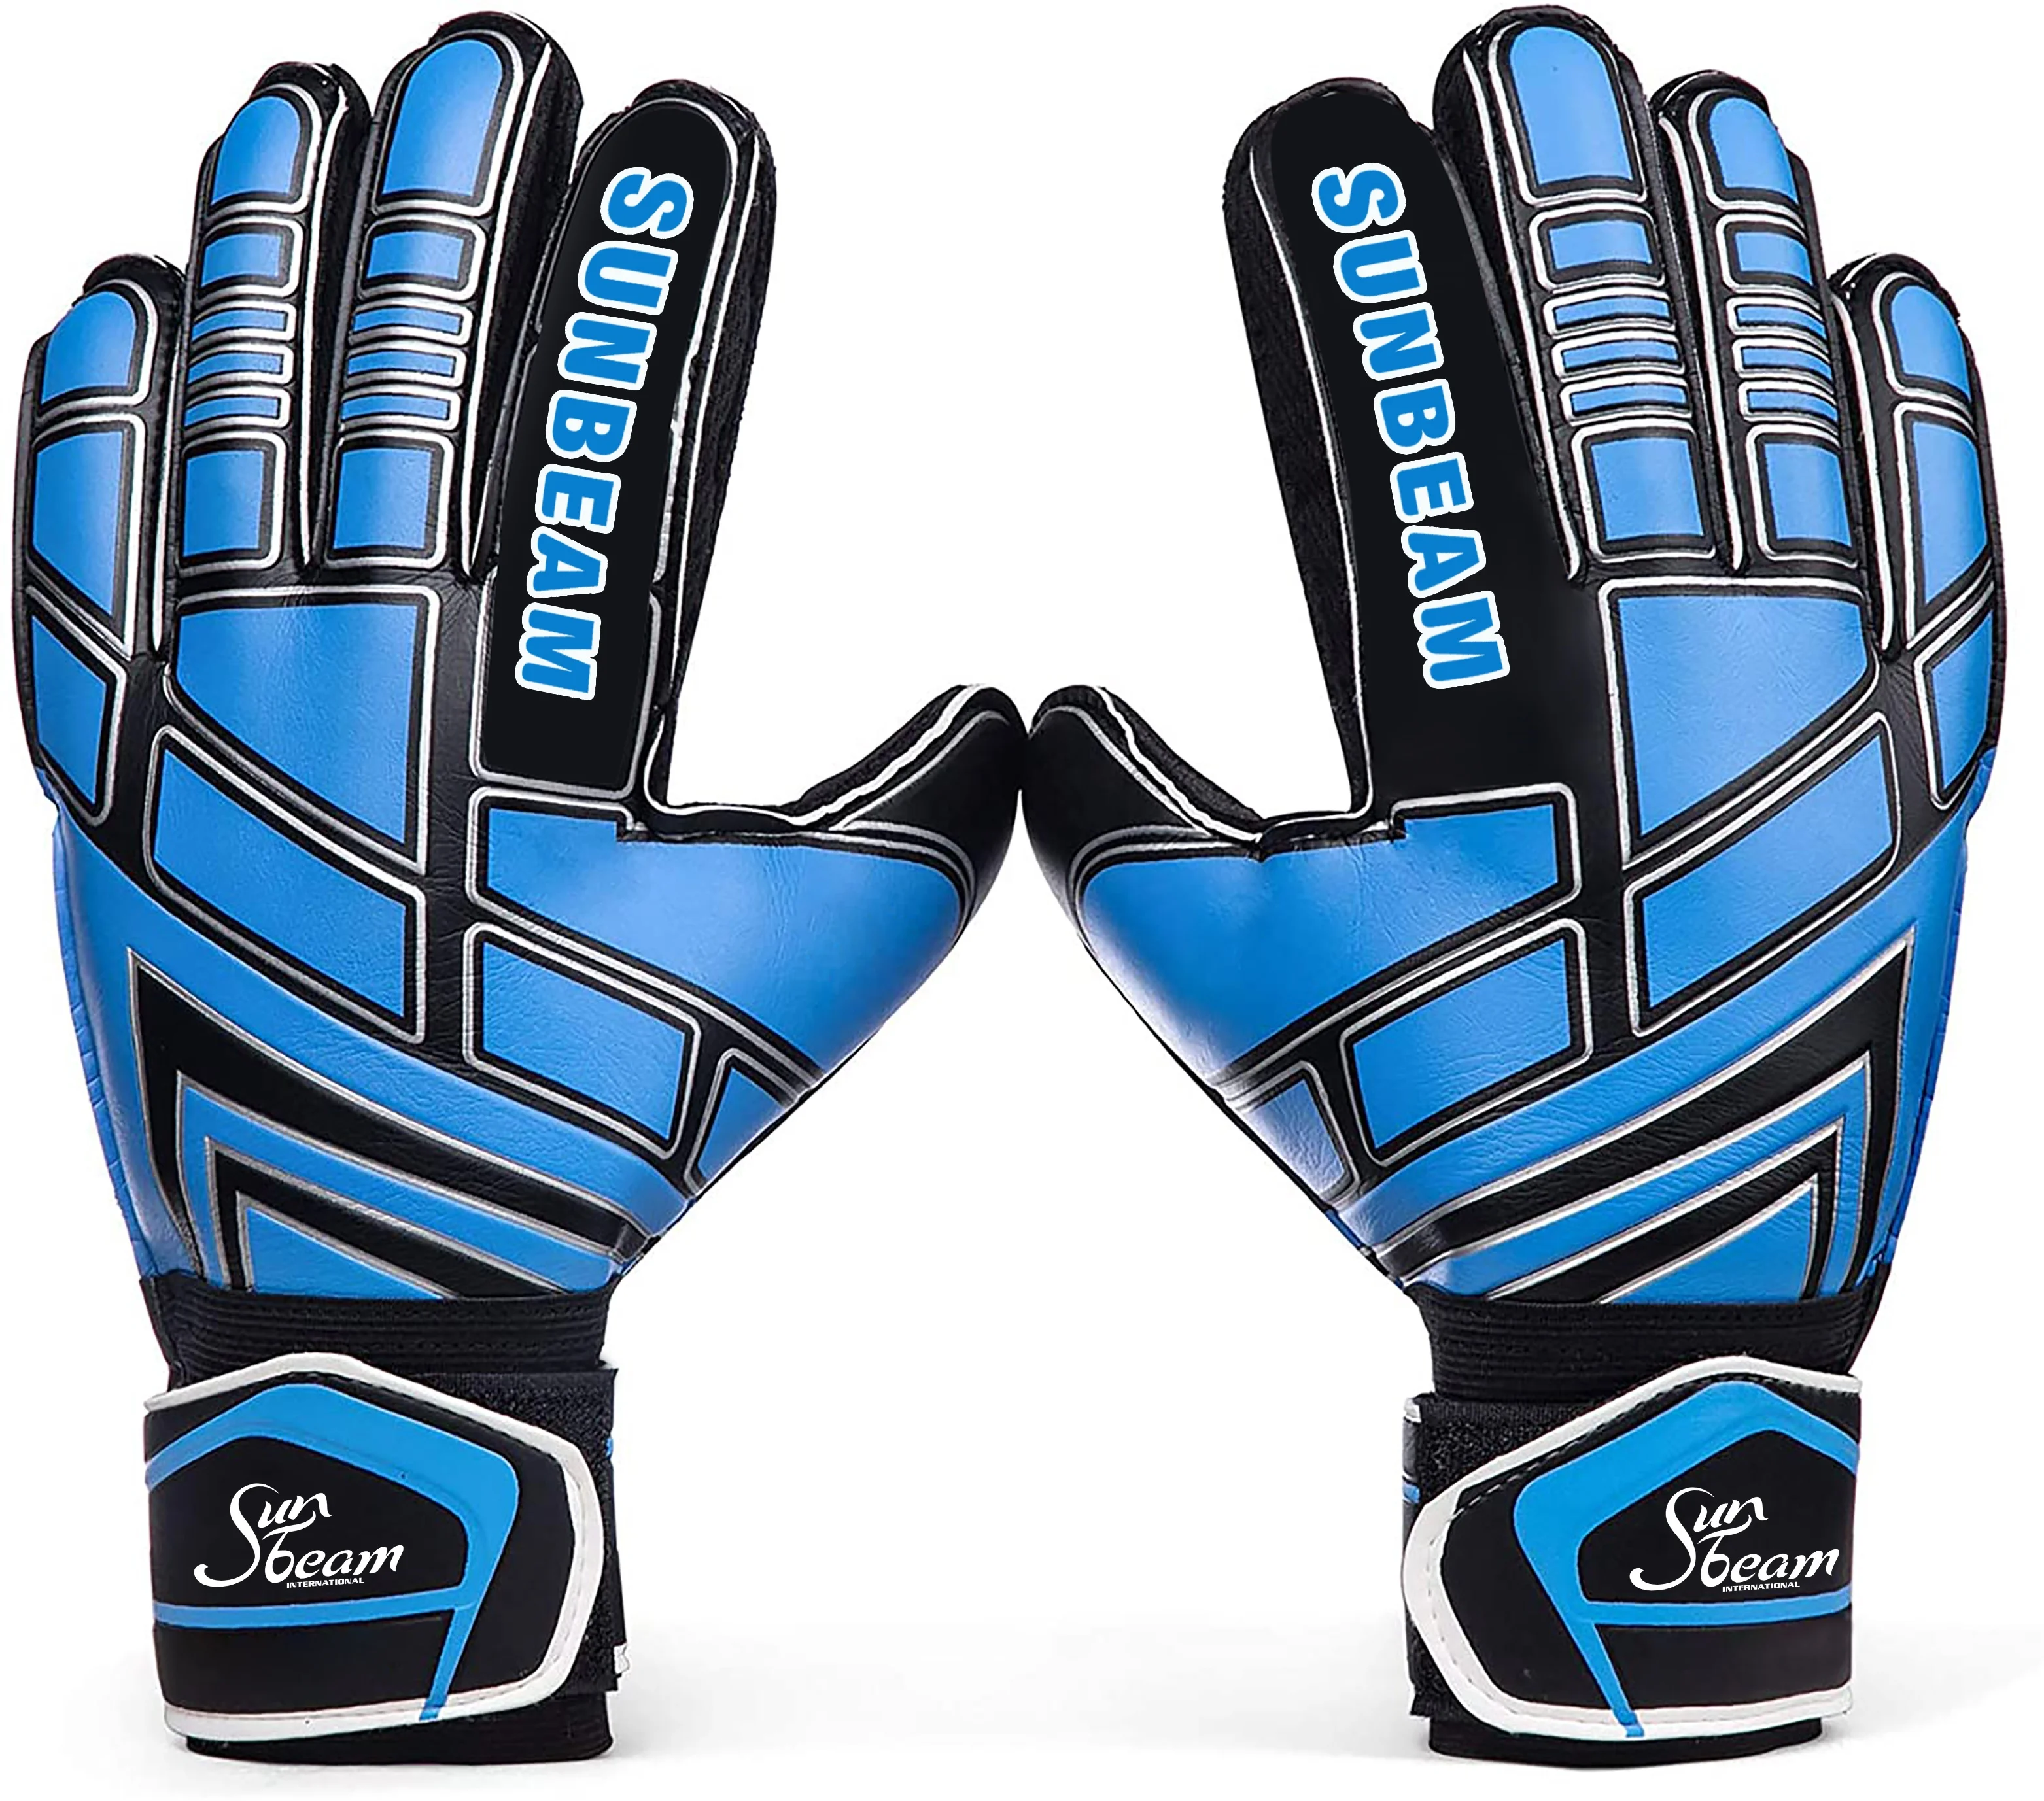 Pro Goalkeeper Gloves | Professional Soccer Goalie Gloves | Superior Finger and Hand Protection (10000003707073)